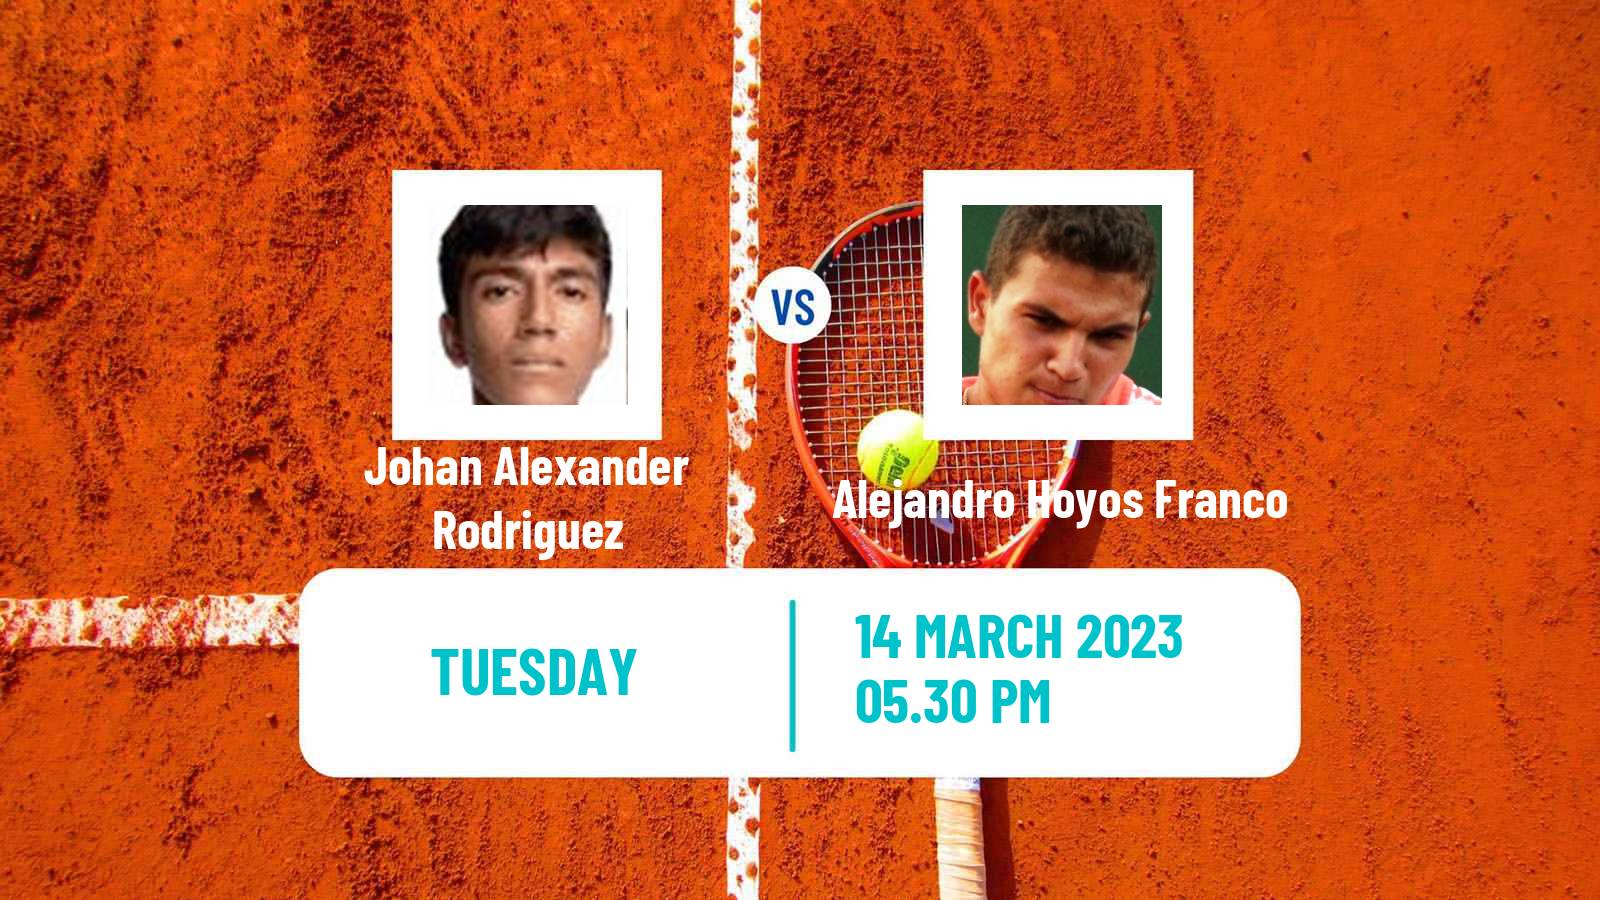 Tennis ITF Tournaments Johan Alexander Rodriguez - Alejandro Hoyos Franco